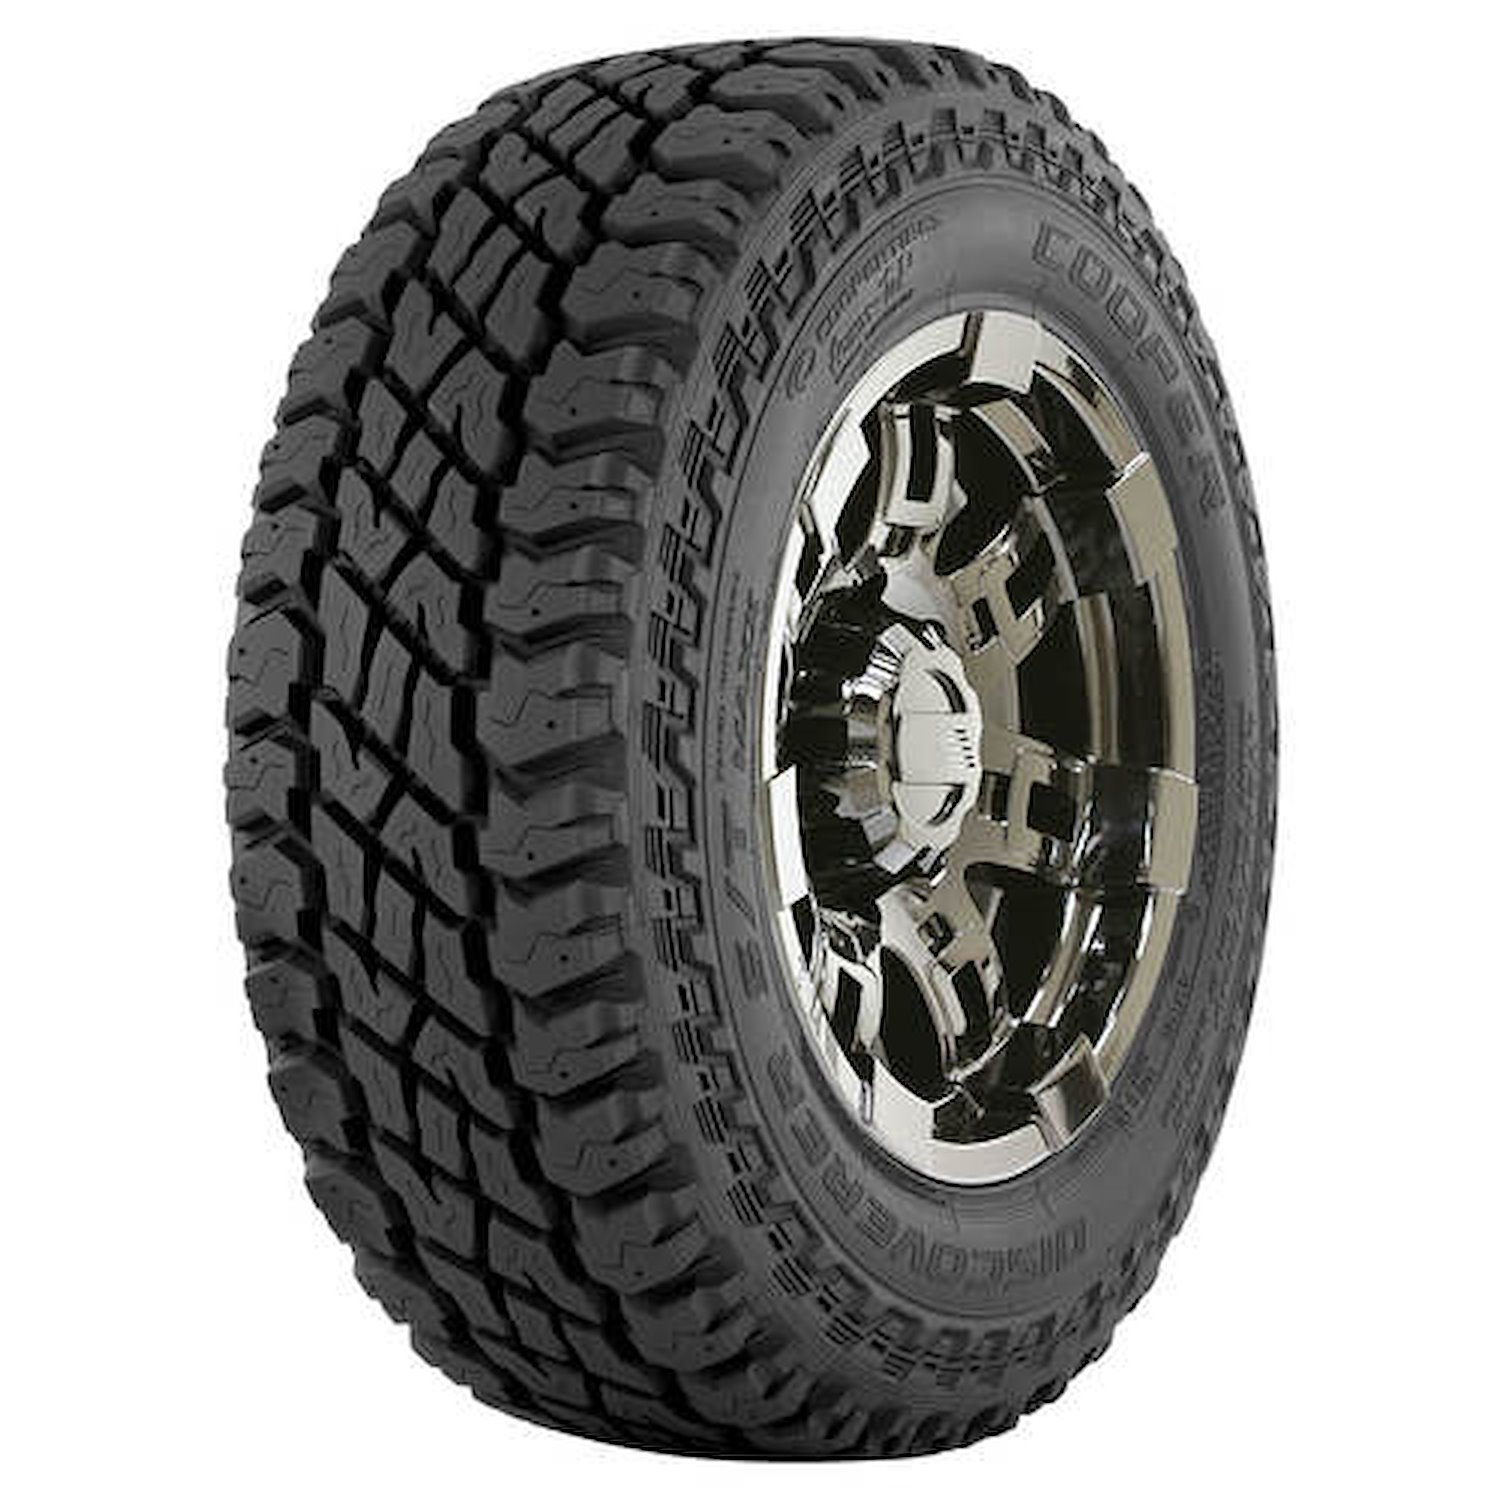 Discoverer S/T Maxx All-Terrain Tire, LT265/70R16